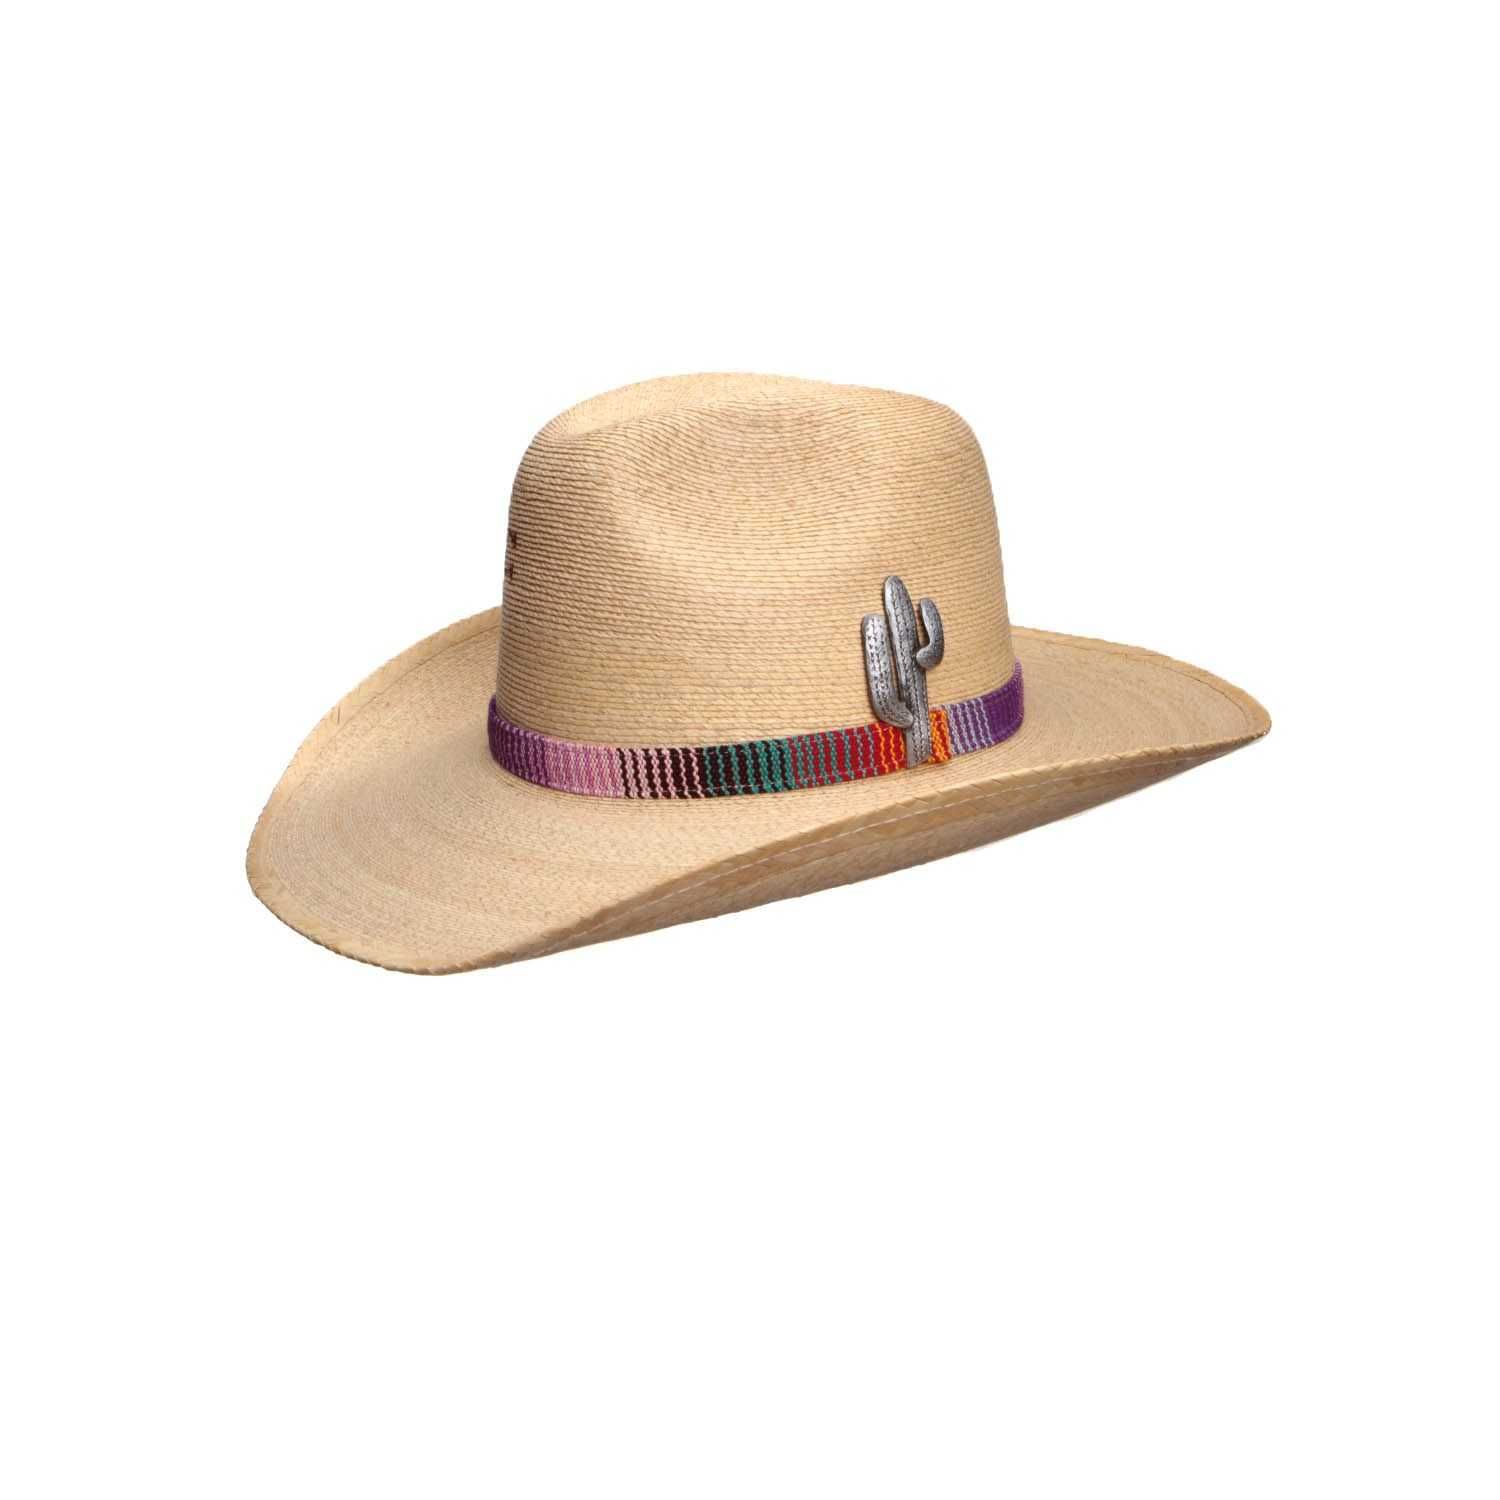 D Botrong Summer Men Straw Hat Cowboy Hat 